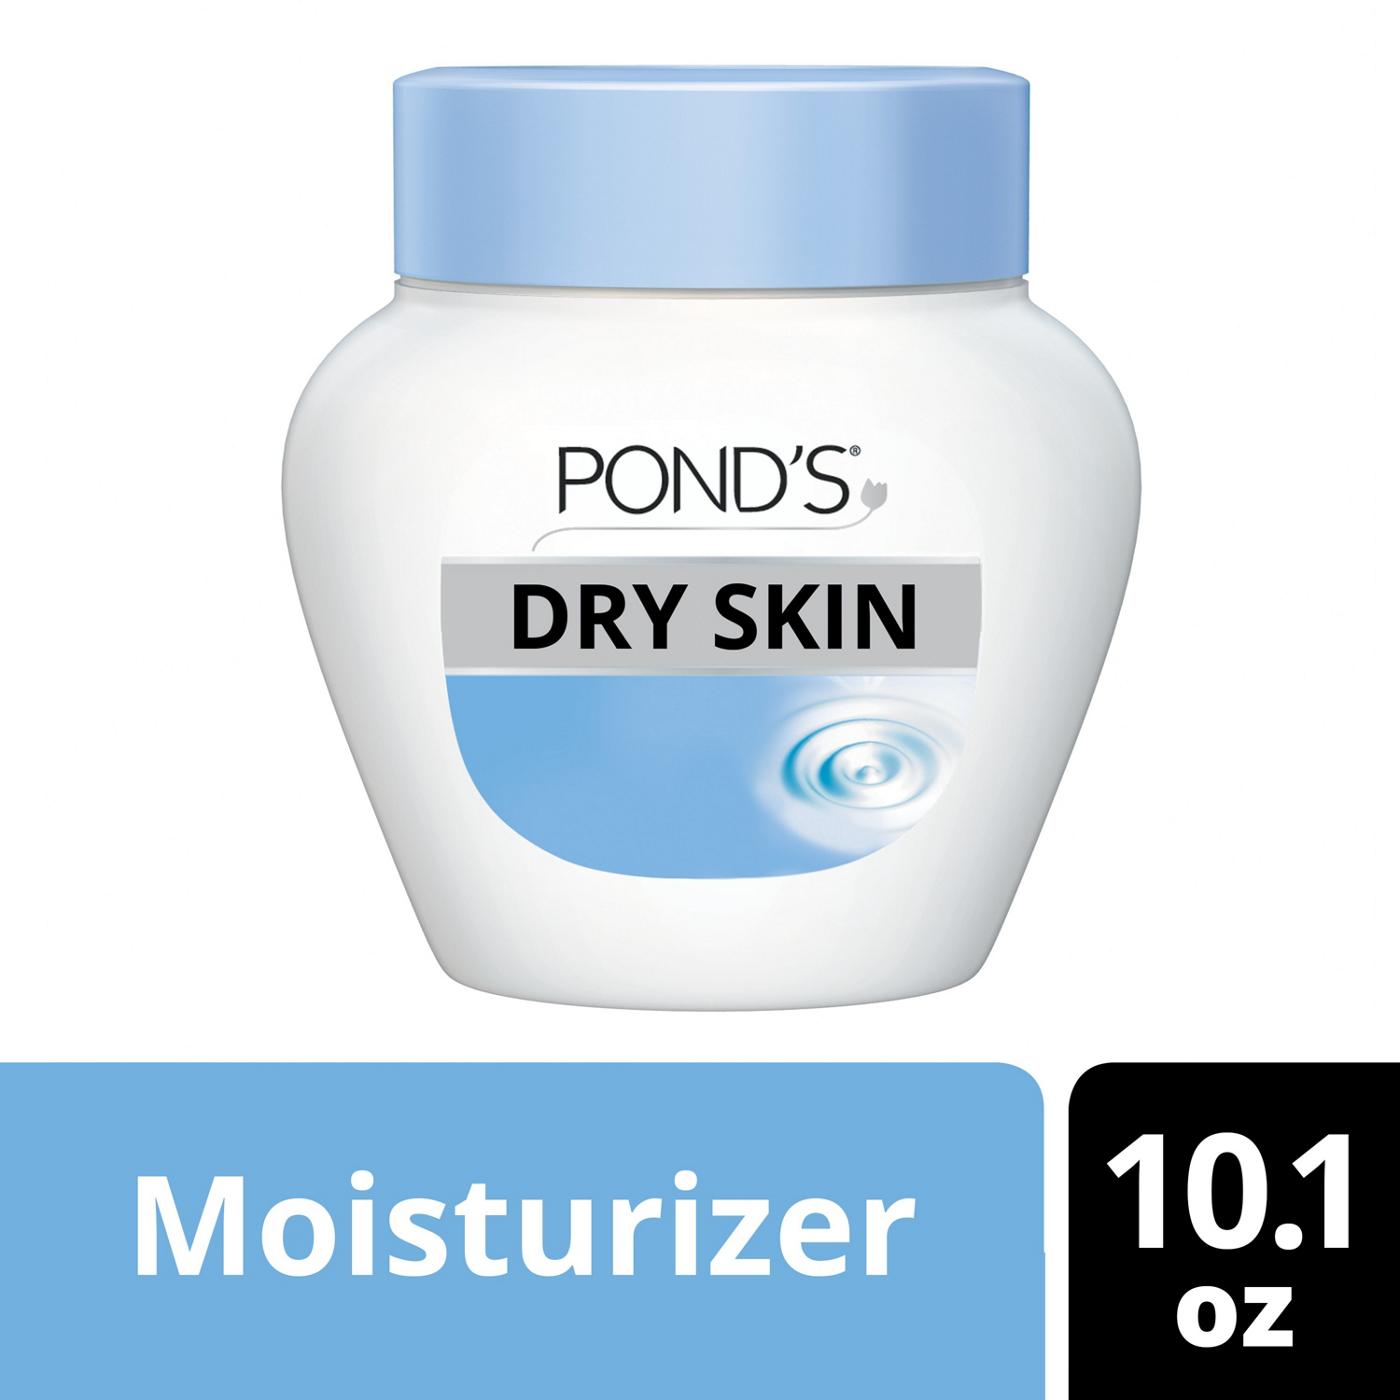 Pond's Dry Skin Cream; image 3 of 3